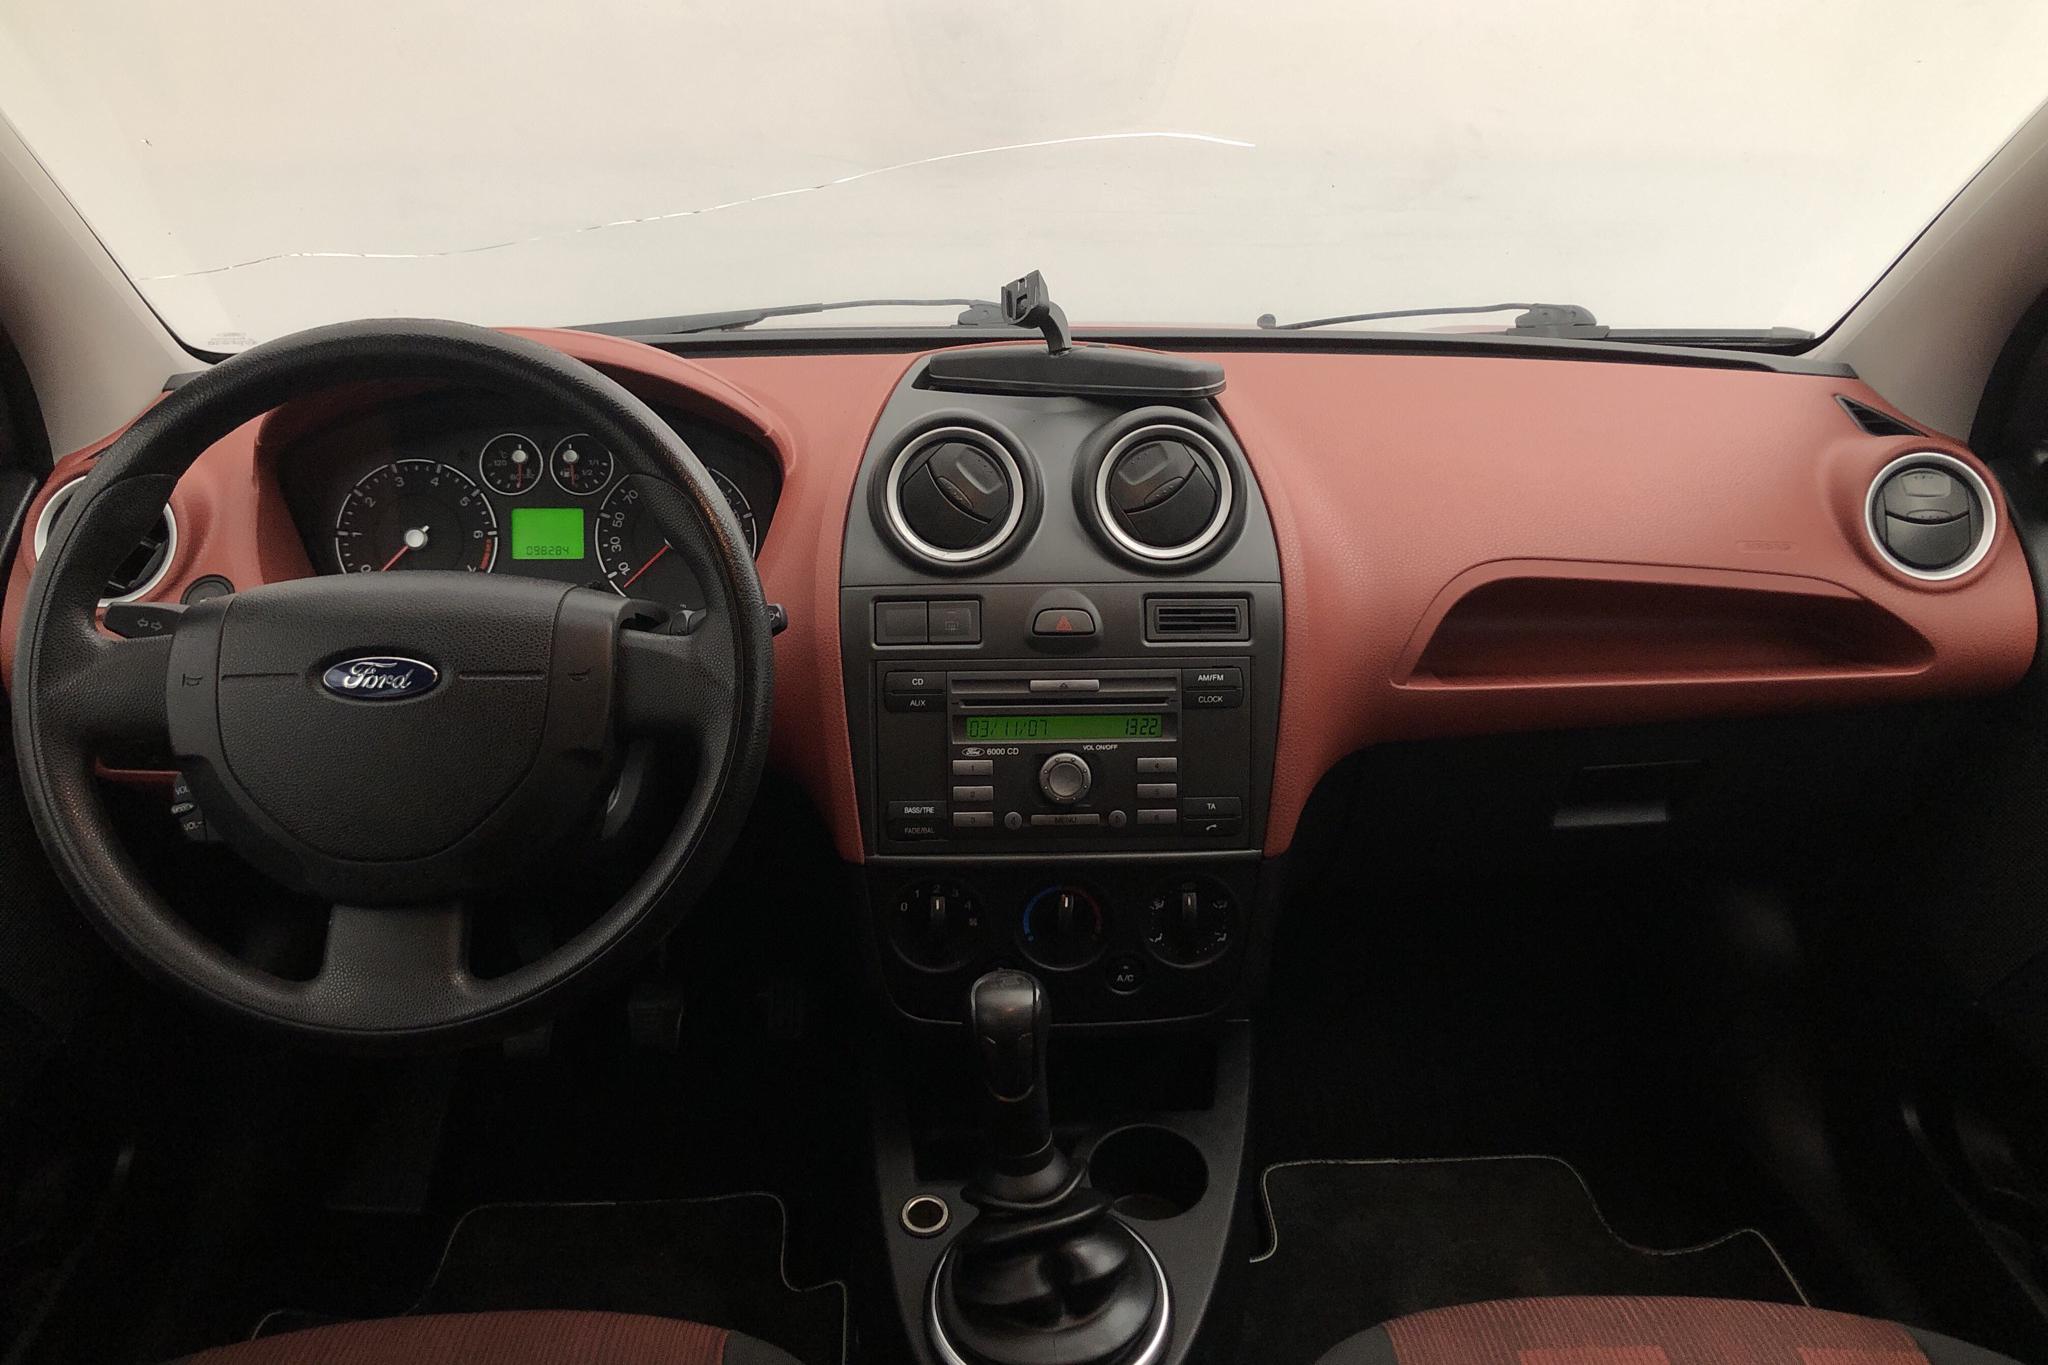 Ford Fiesta 1.4 5dr (80hk) - 130 000 km - Manual - red - 2006